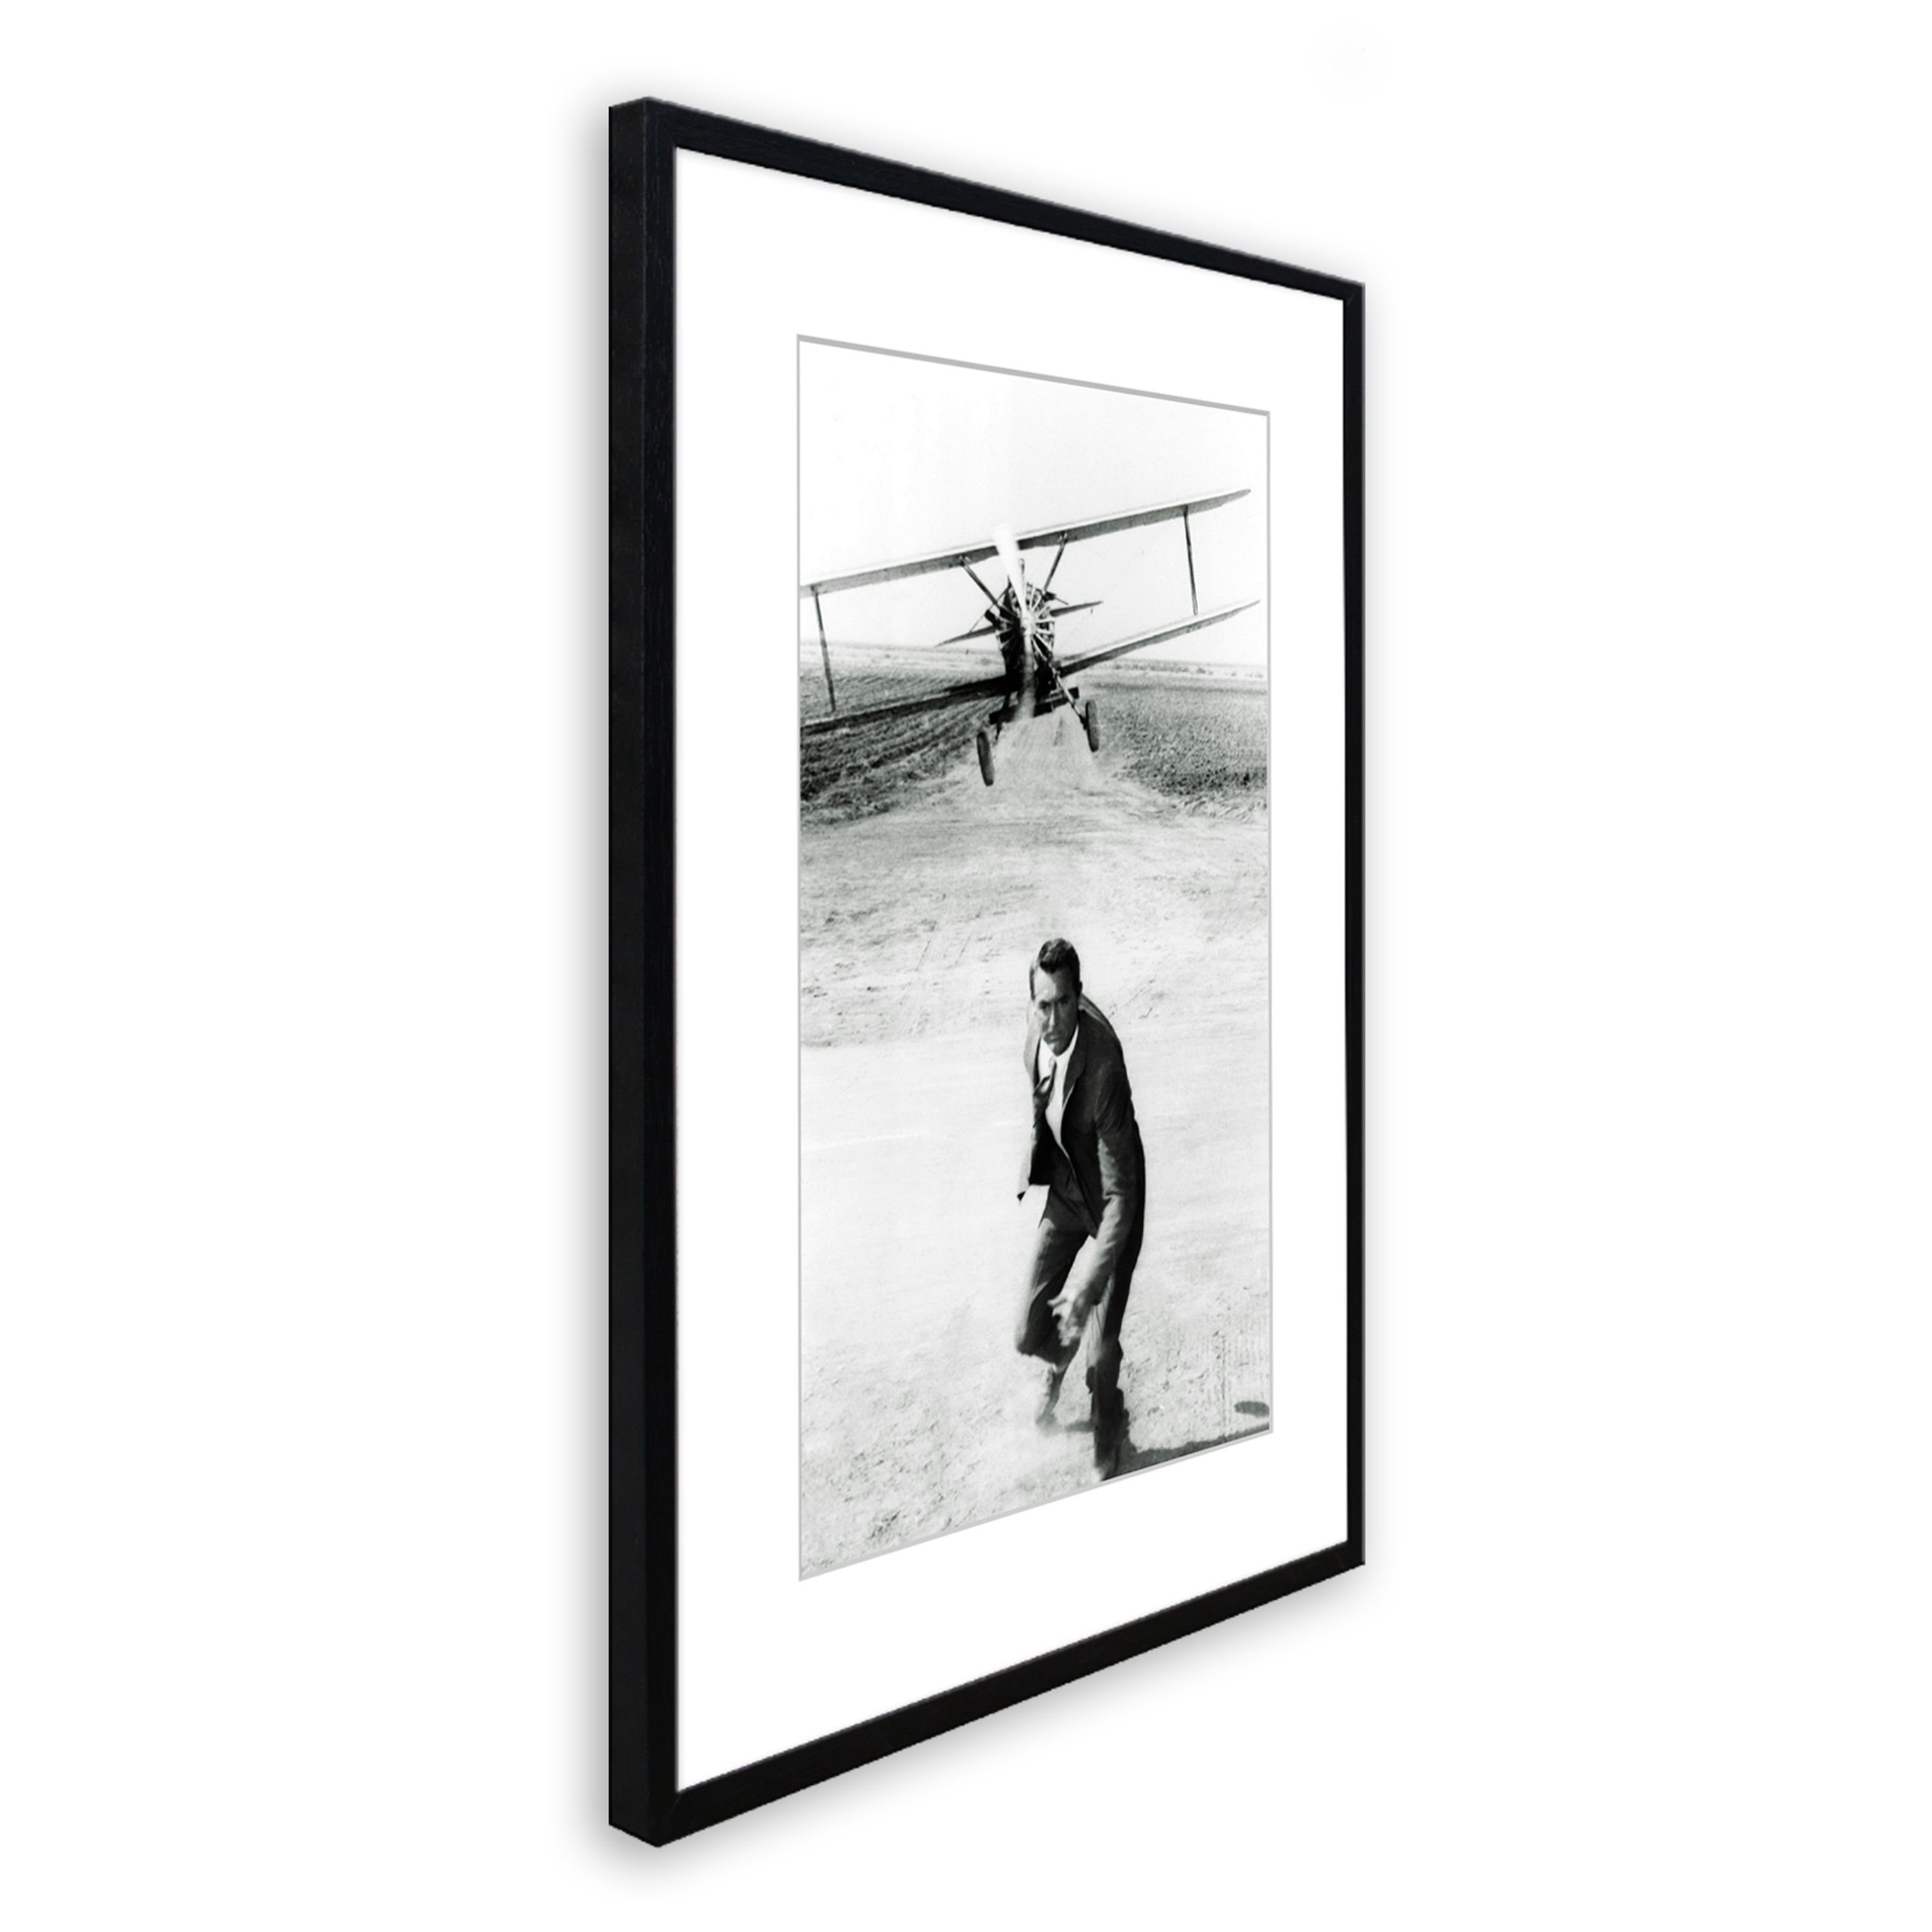 artissimo Bild mit Rahmen Bild / Cary Cary / Grant Poster Rahmen Grant, 51x71cm schwarz-weiß Film-Star: gerahmt mit